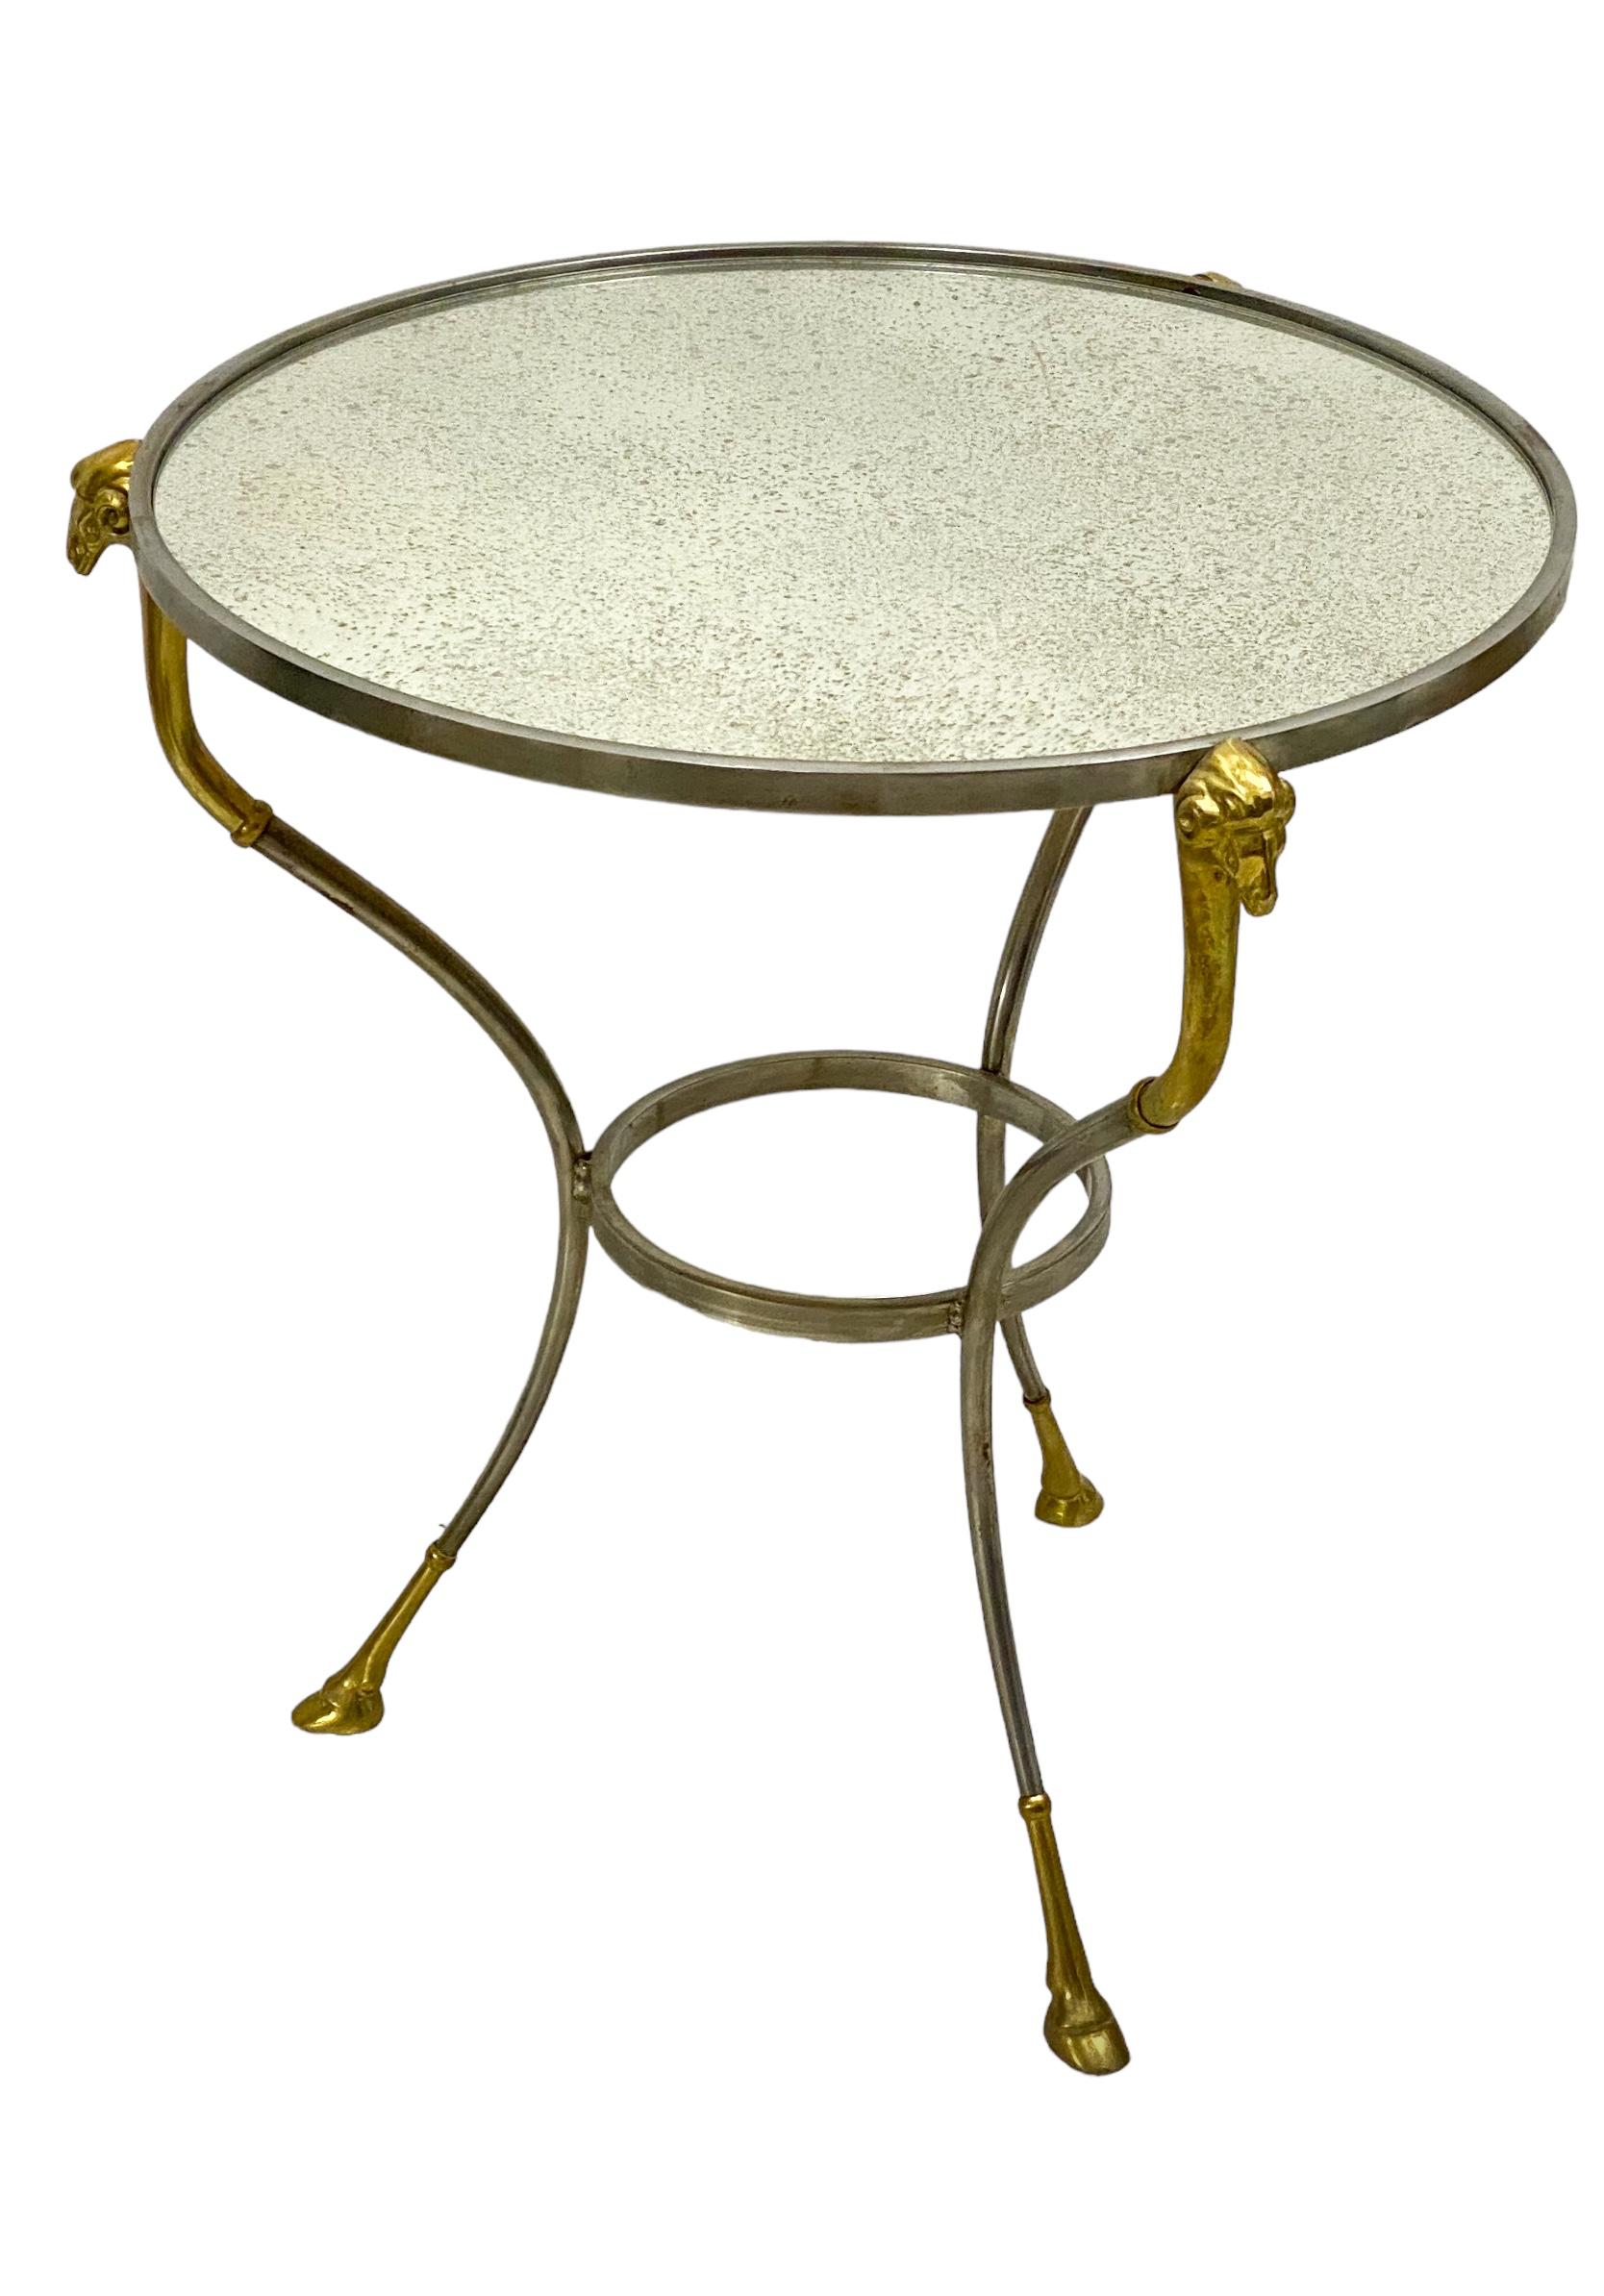 Italian Maison Jansen Inspired Steel & Brass Mirrored Gueridon / Side Table  For Sale 2